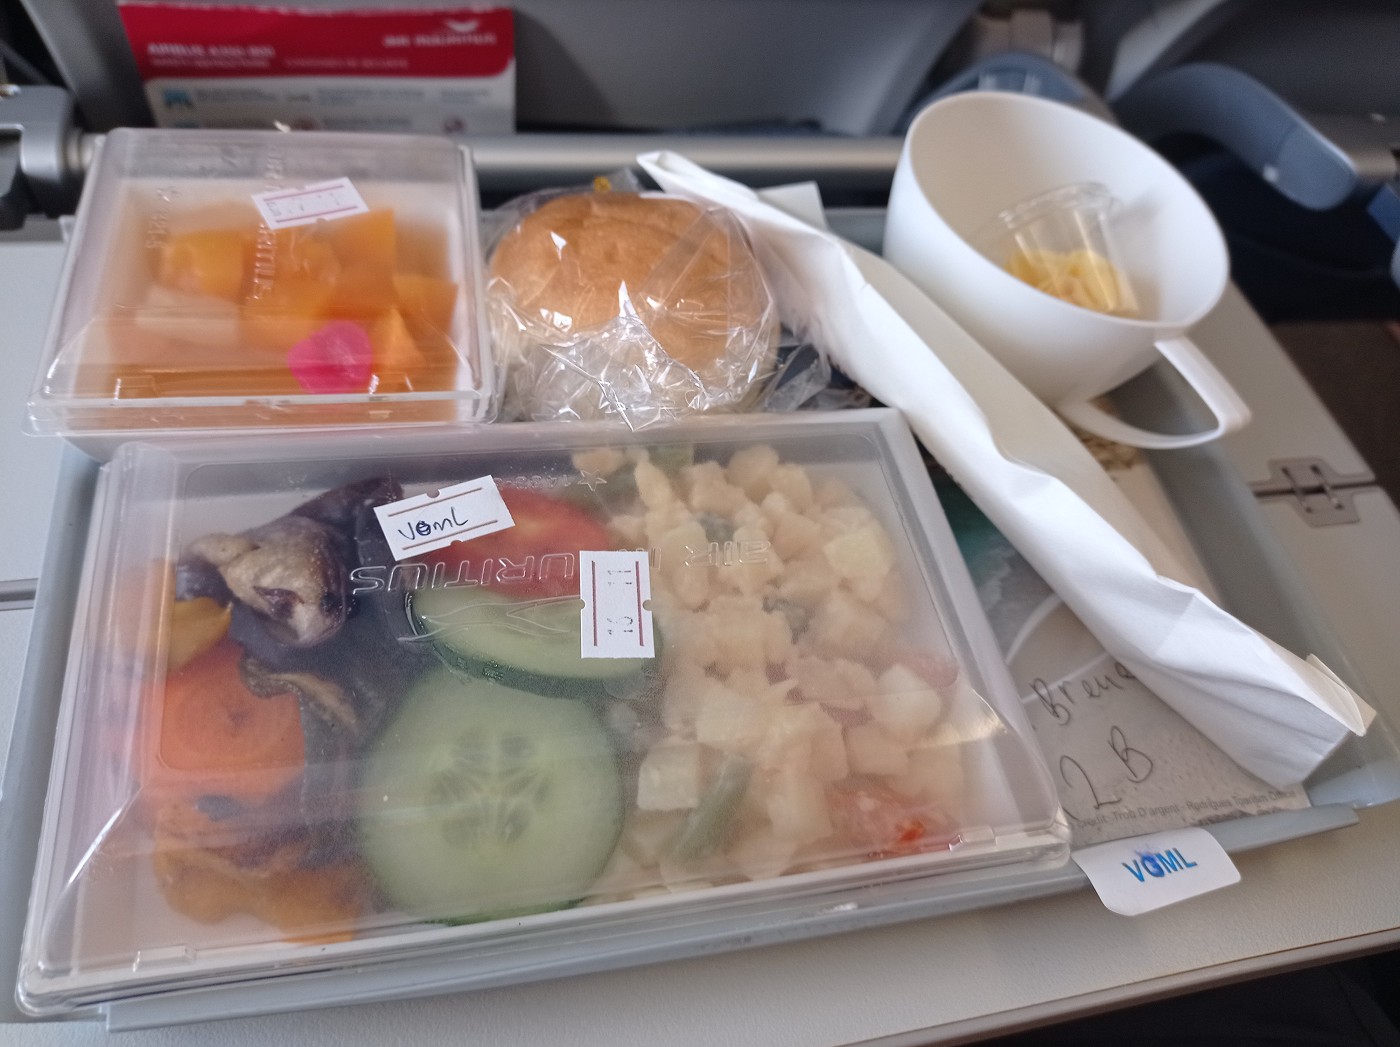 Air Mauritius VOML vegetarian oriental meal plane food